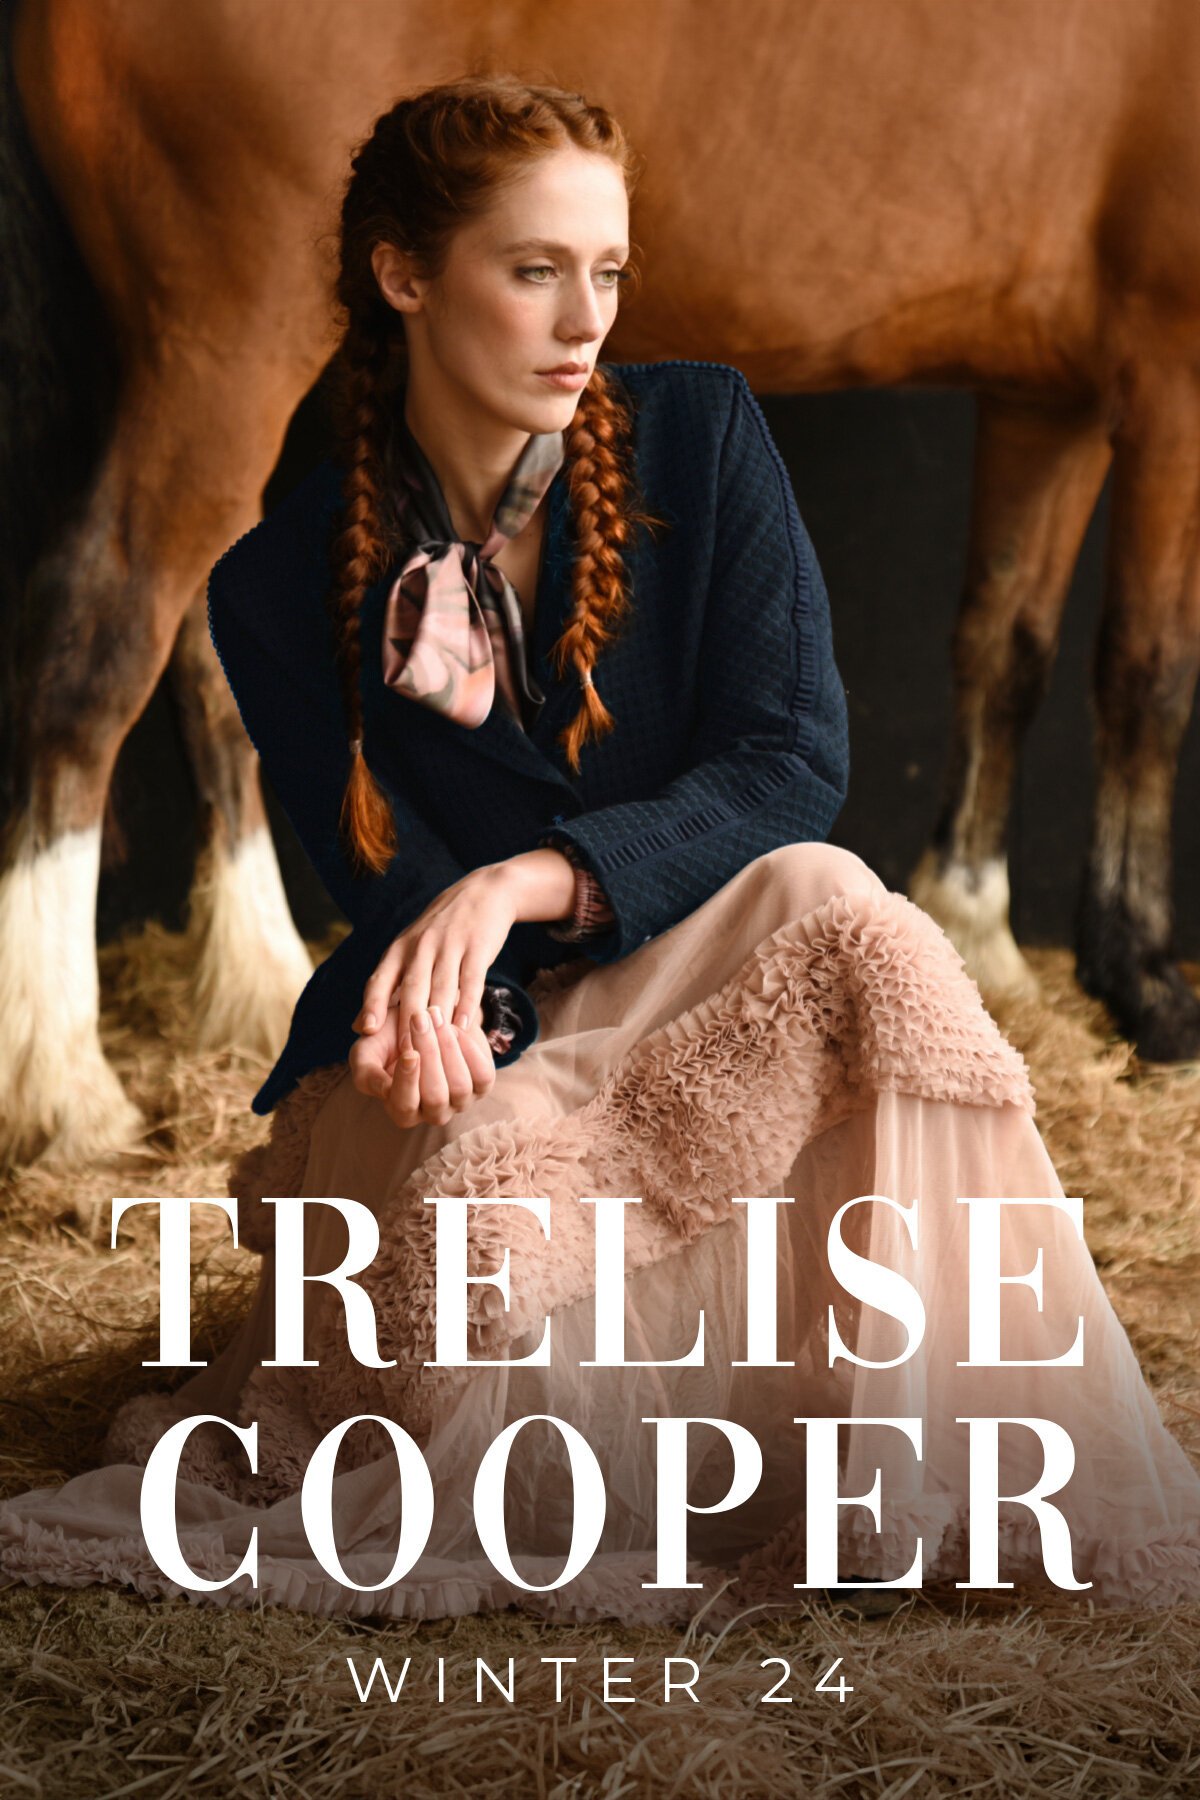 Trelise Cooper CAMI AWARDS Cotton Cami - Brand-Trelise Cooper